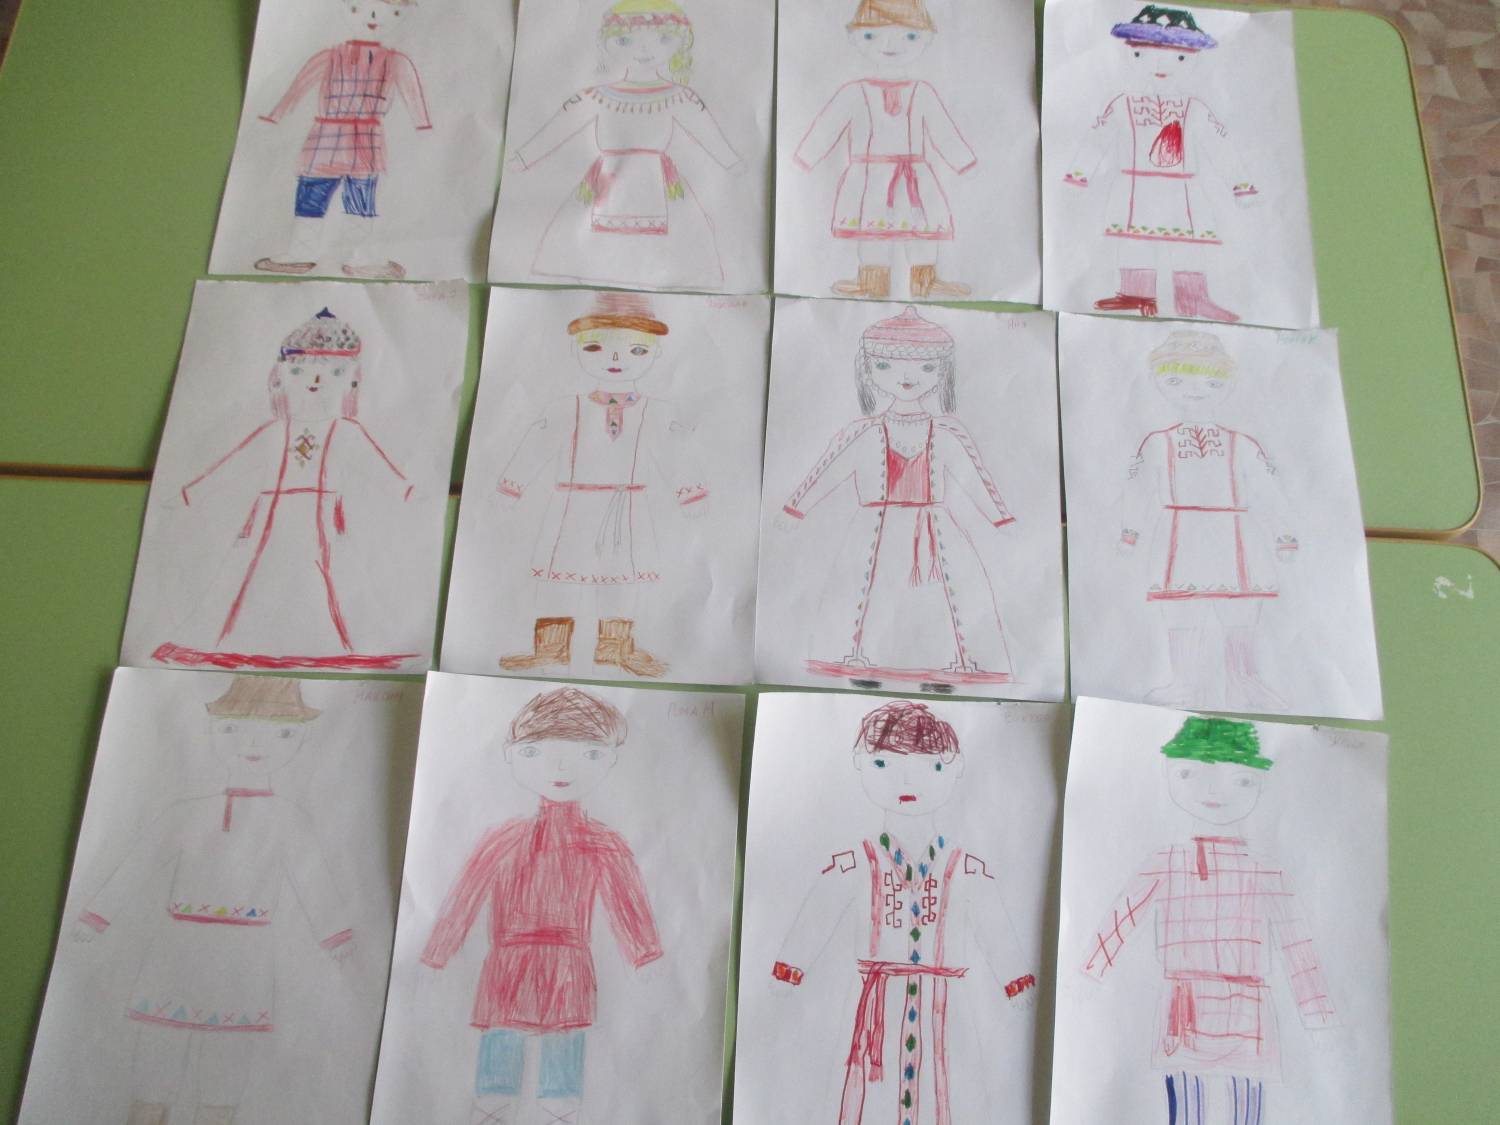 чувашский костюм картинки для детей